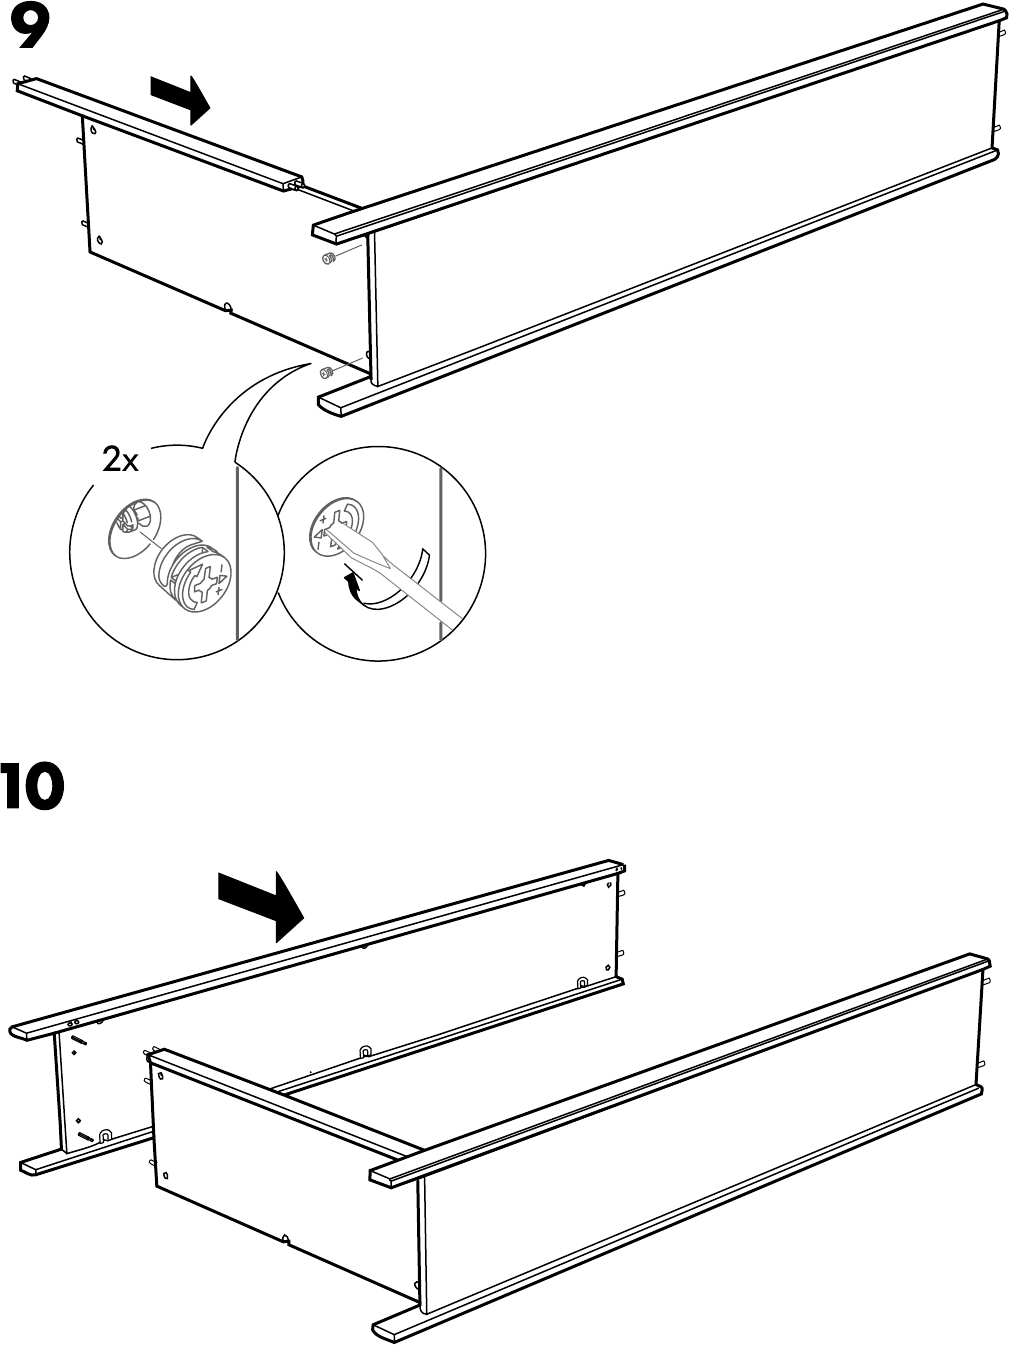 Ikea Grevback Bookcase 37 3 4x74 4 Assembly Instruction